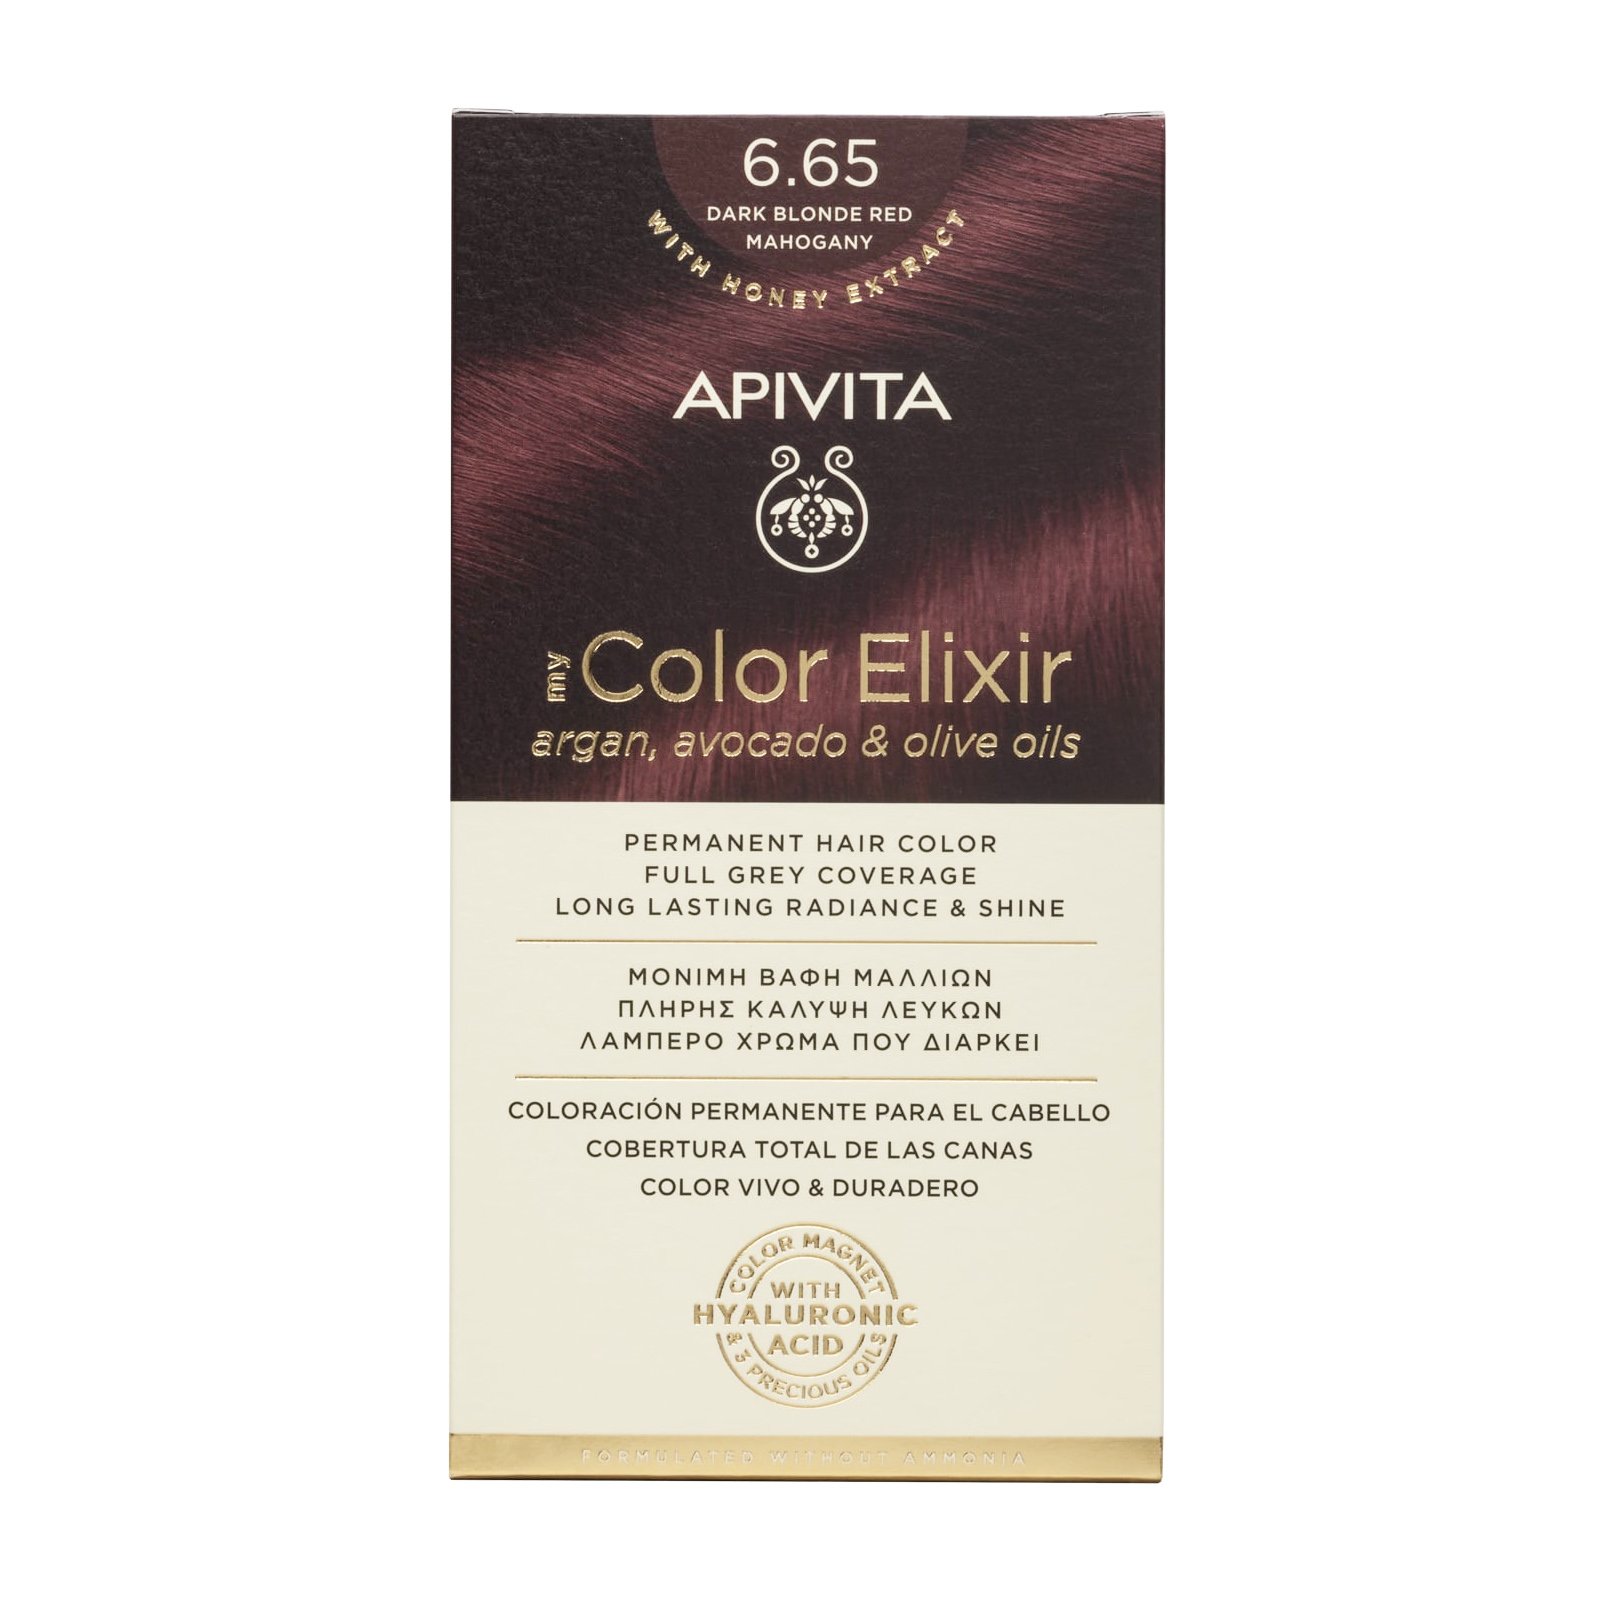 Apivita My Color Elixir Μόνιμη Βαφή Μαλλιών με Καινοτόμο Σύστημα Color Magnet που Σταθεροποιεί και Σφραγίζει το Χρώμα στην Τρίχα – N 6.65 ΕΝΤΟΝΟ ΚΟΚΚΙΝΟ